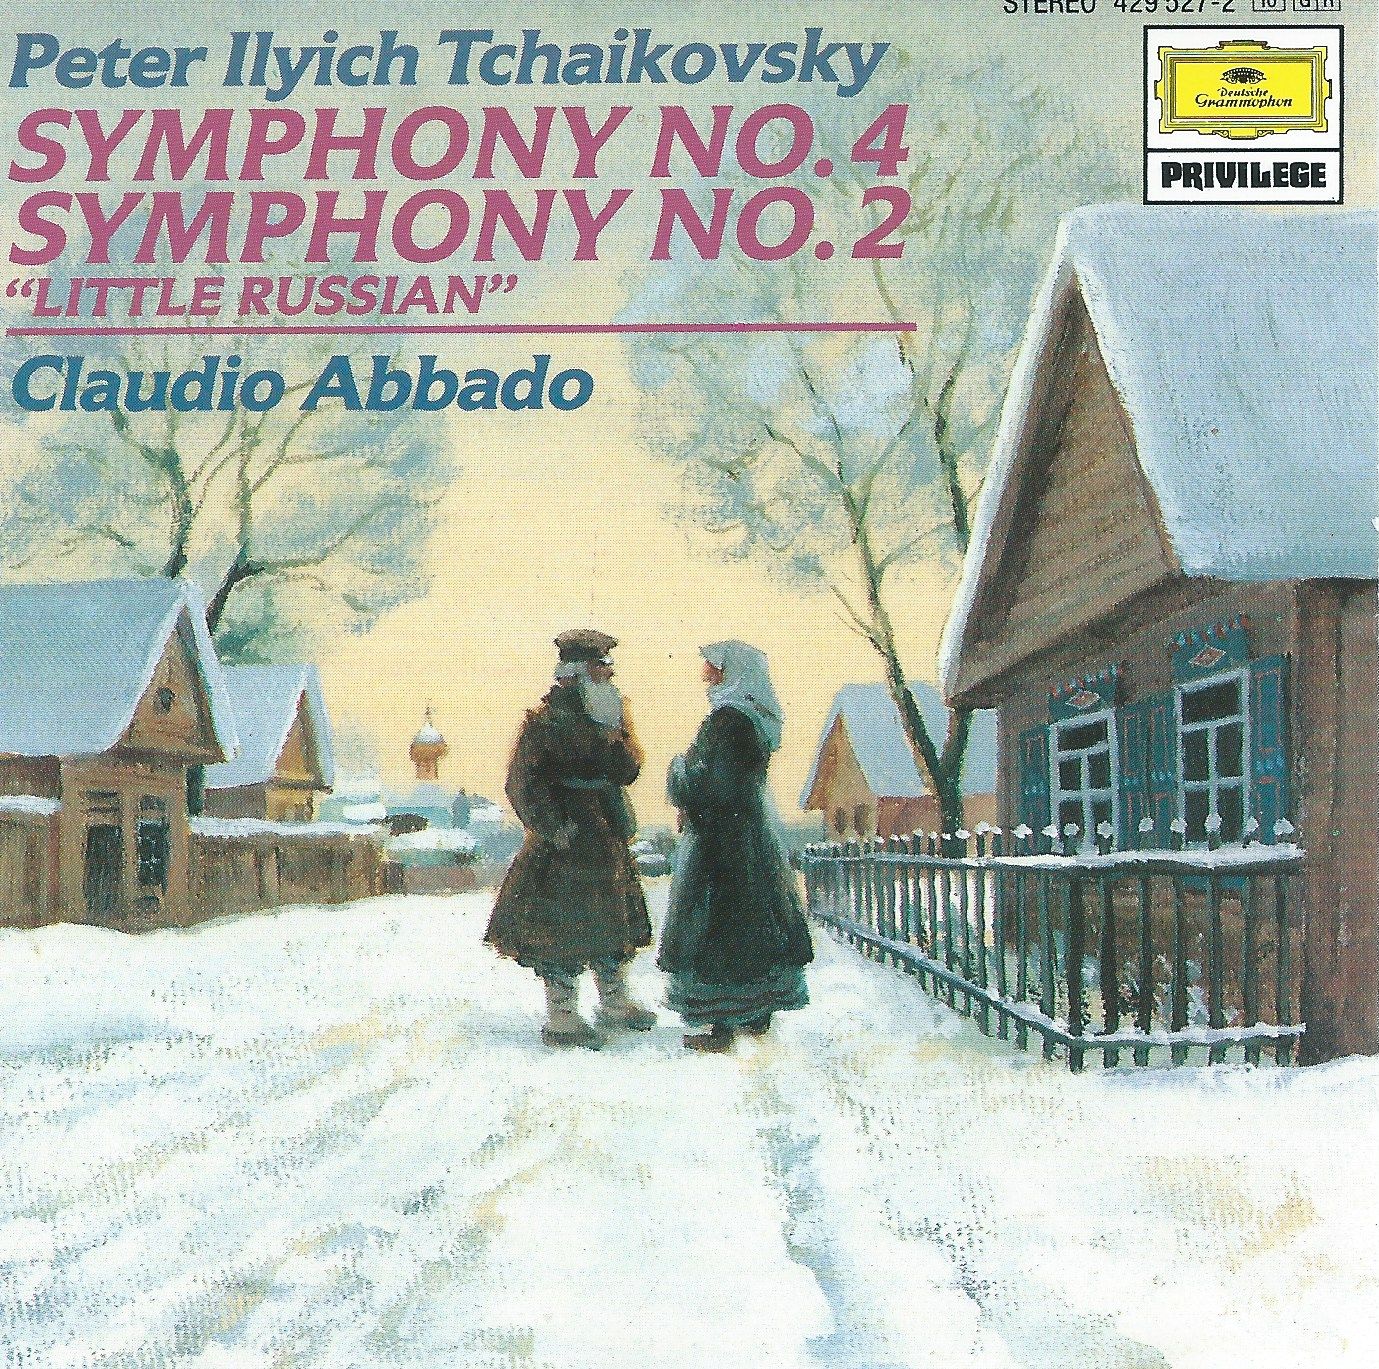 Claudio Abbado and a Little Russian ...